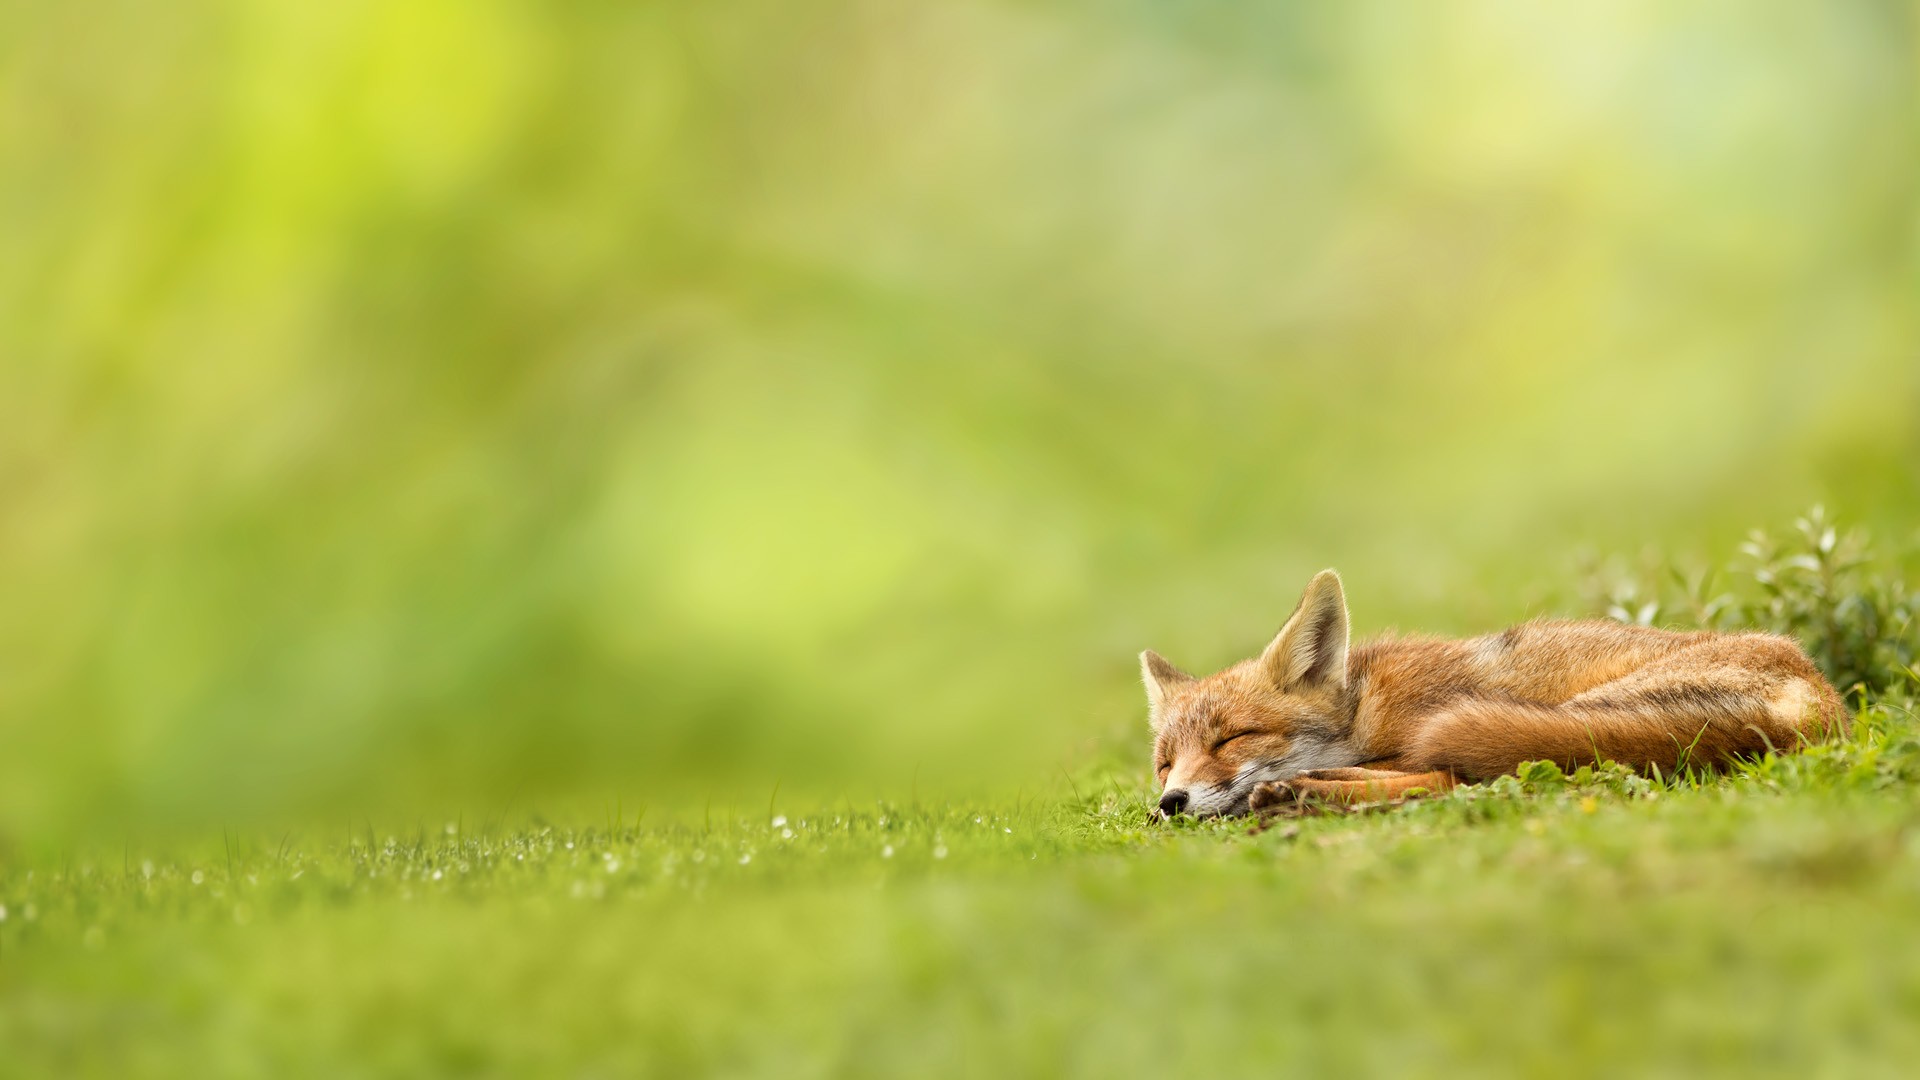 General 1920x1080 fox nature landscape sleeping field grass depth of field green wildlife mammals